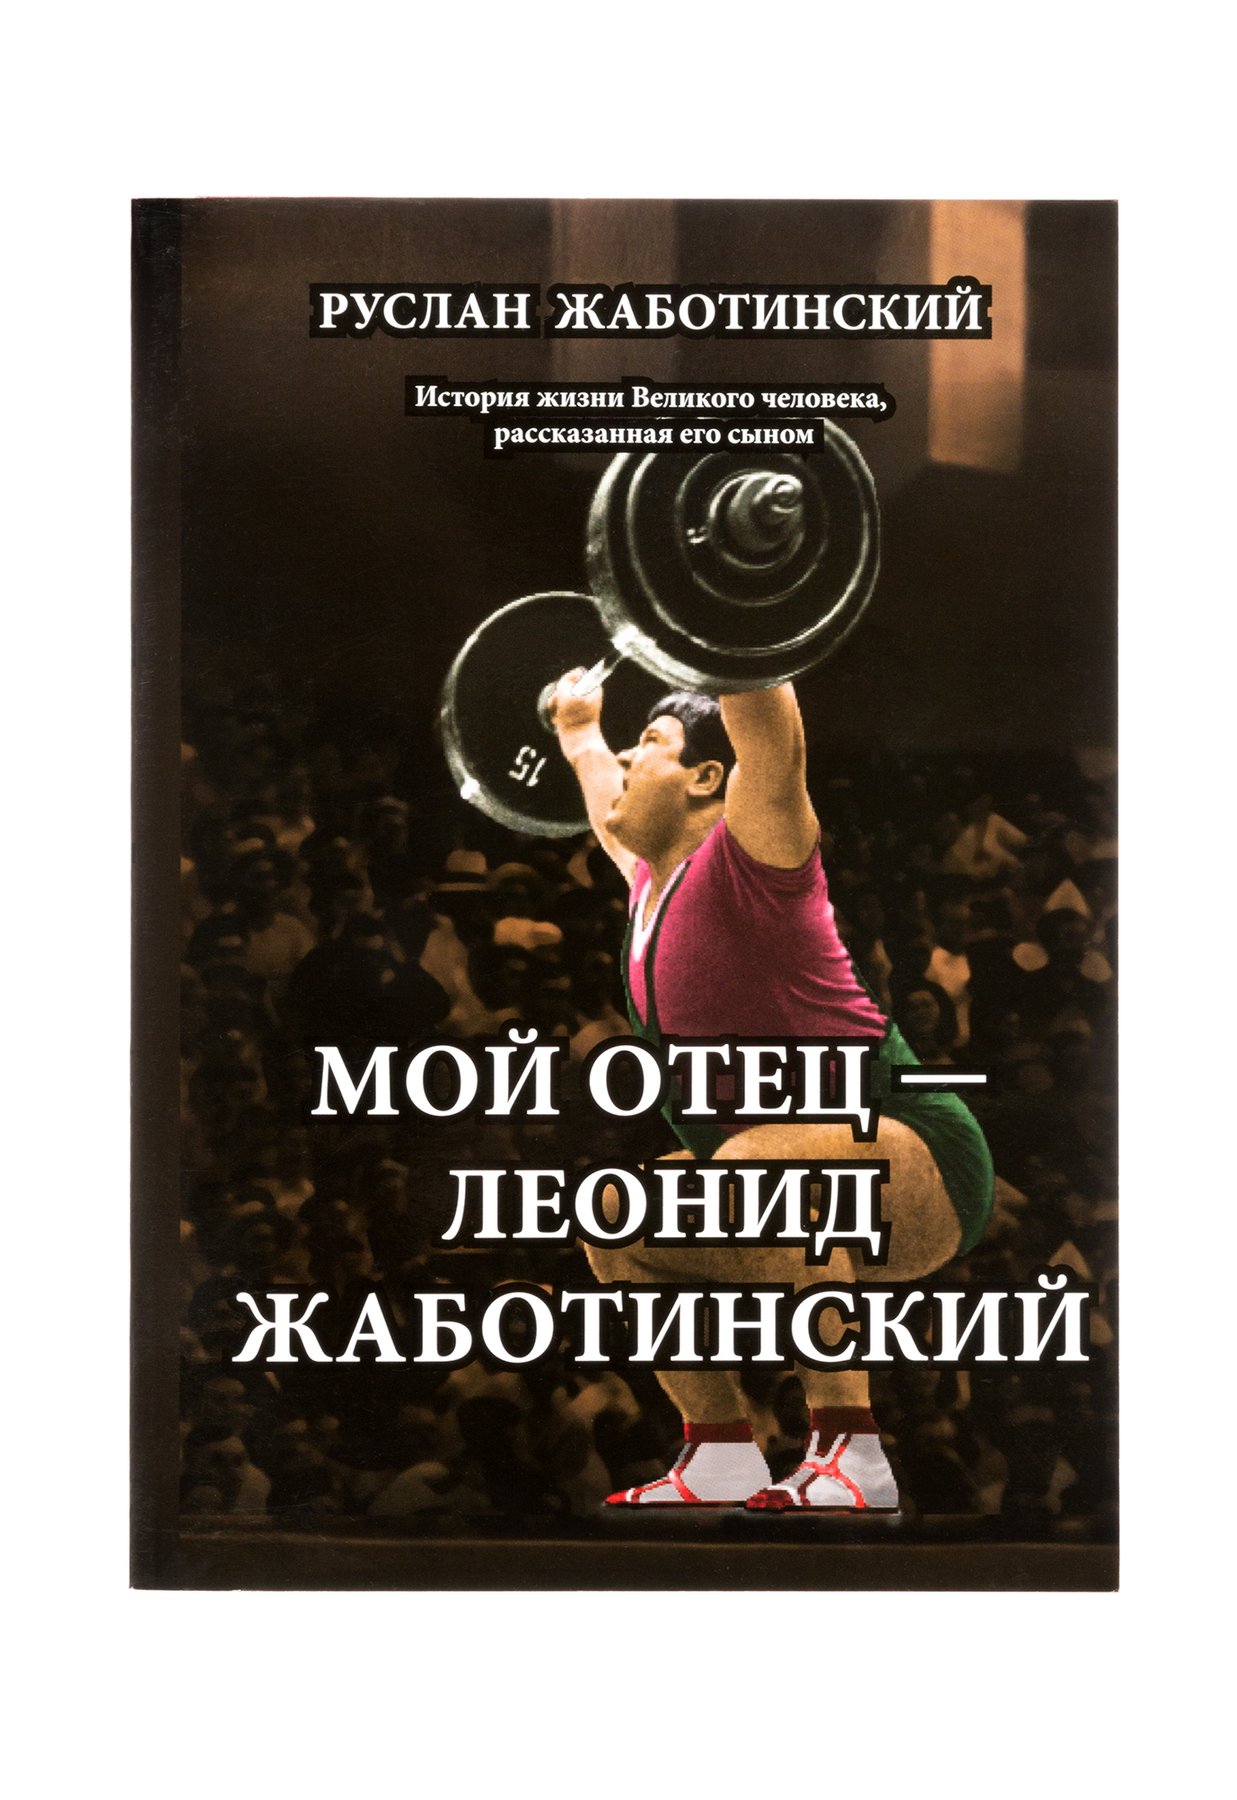 Book My father Leonid Zhabotinsky, PDF